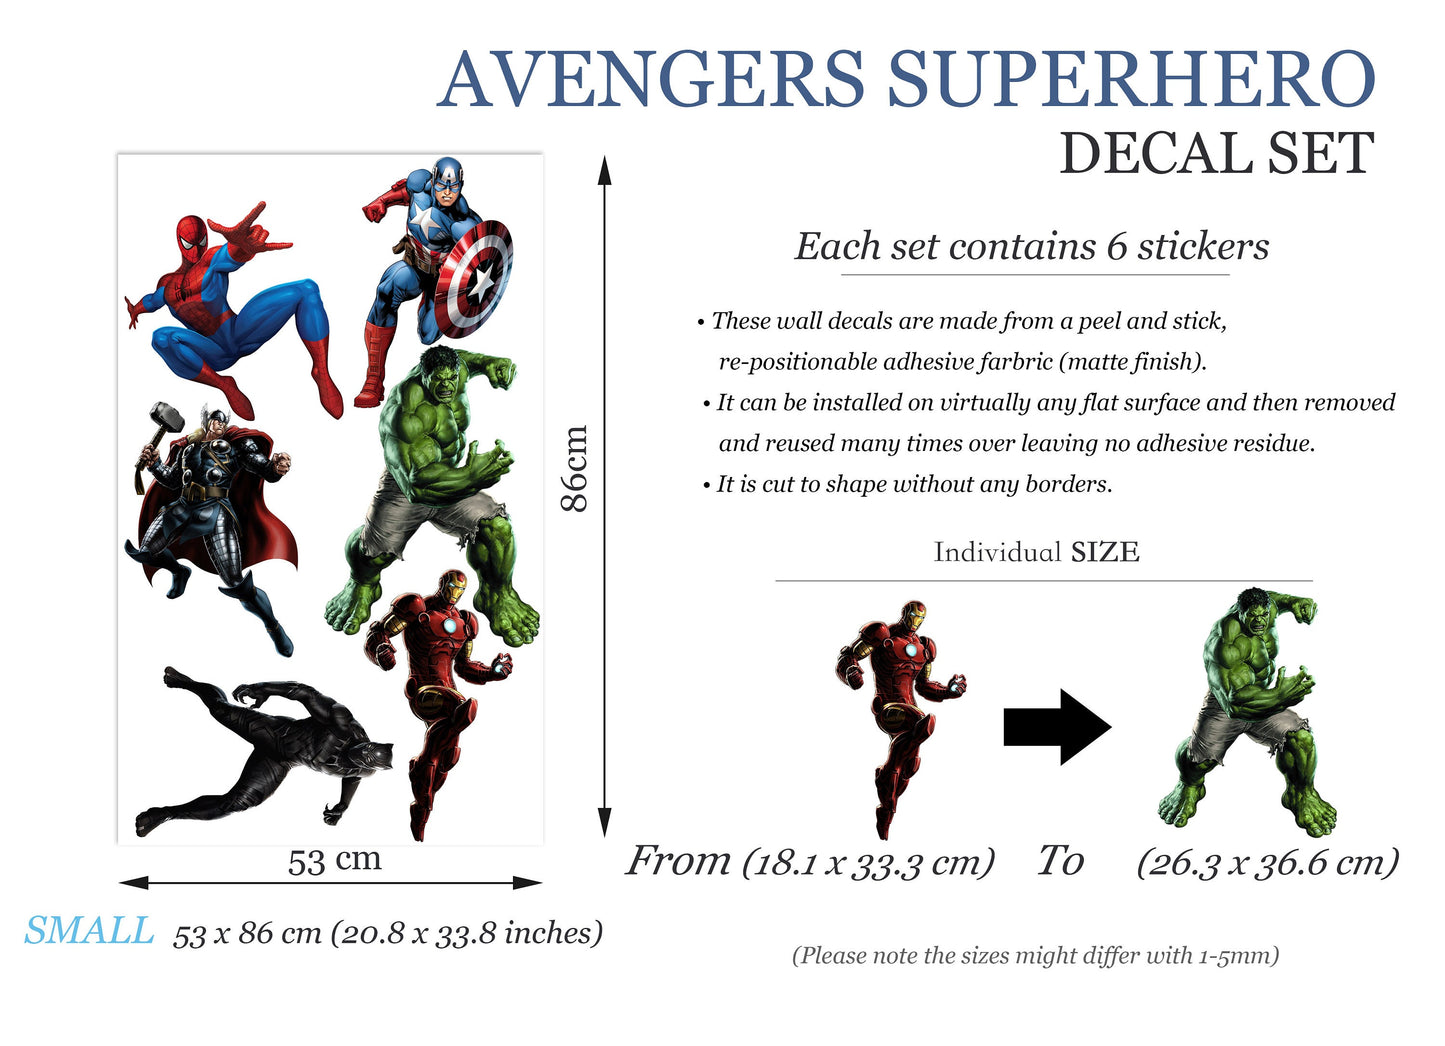 Superhero Hulk Spiderman Iron Man Captain America Avengers Thor Panther Wall Decal - Boys Room Decoration - BR191